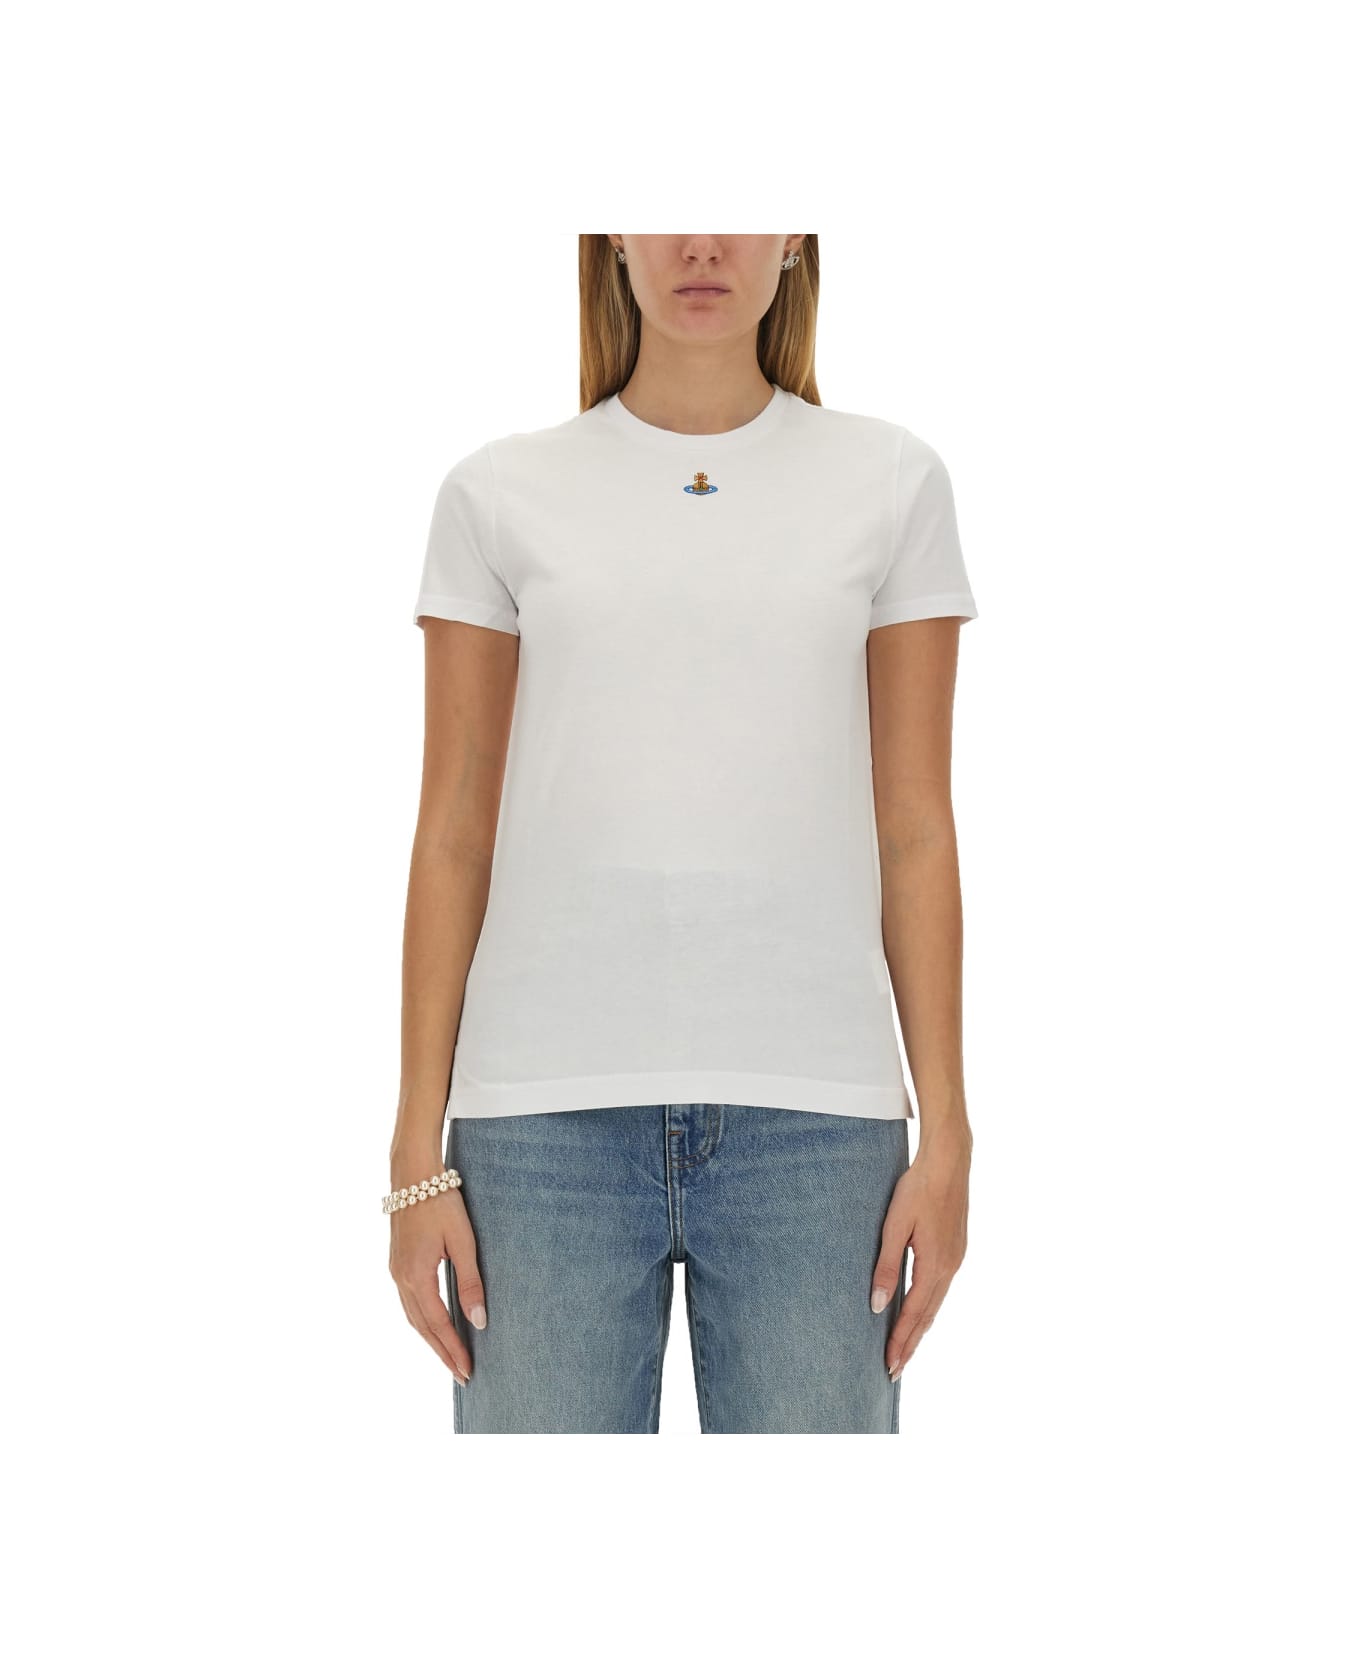 Vivienne Westwood Orb Peru T-shirt - WHITE Tシャツ